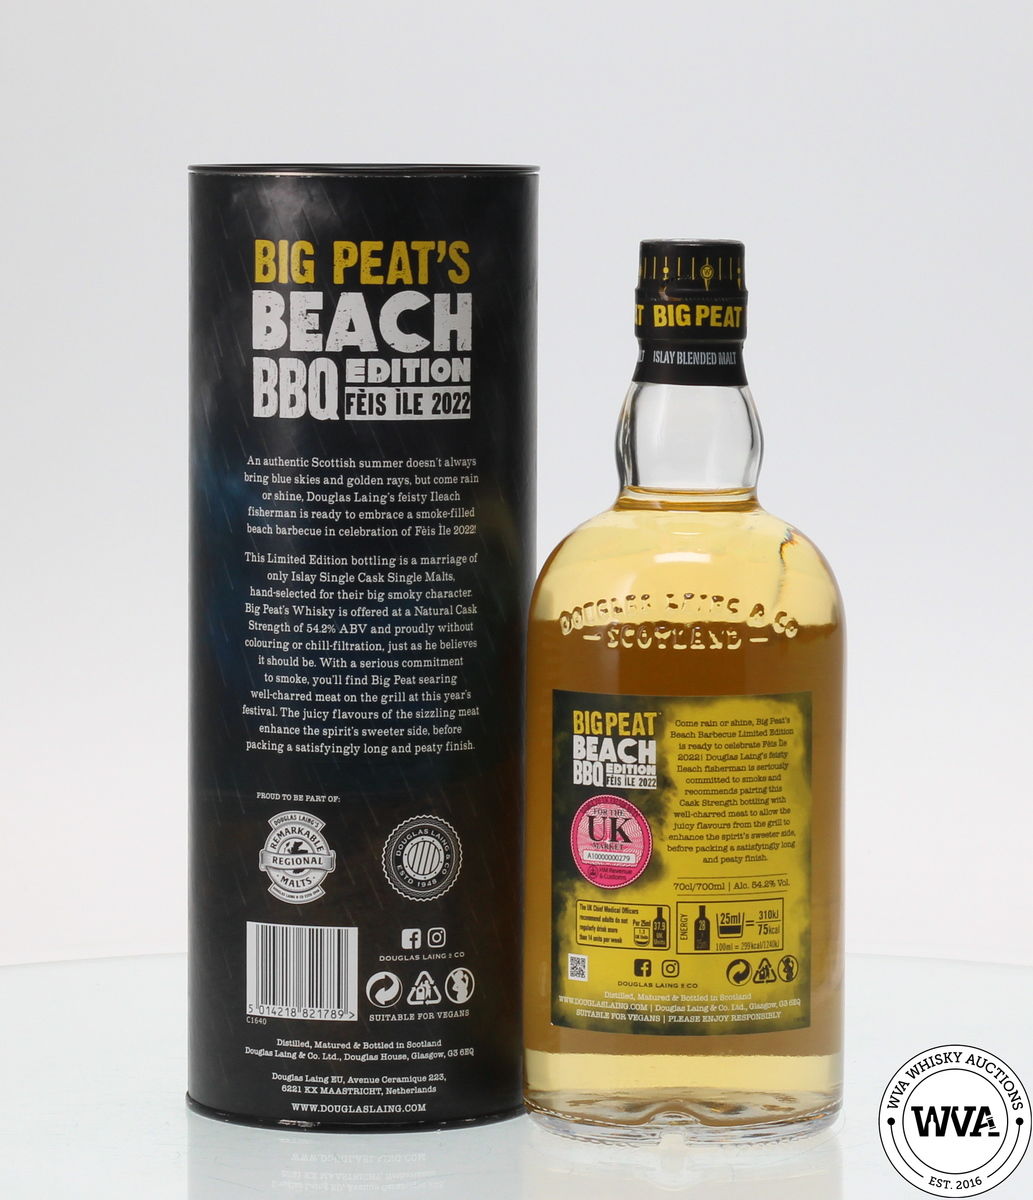 BUY] Big Peat's Beach BBQFeis Ile 2022 Islay Blended Malt Scotch